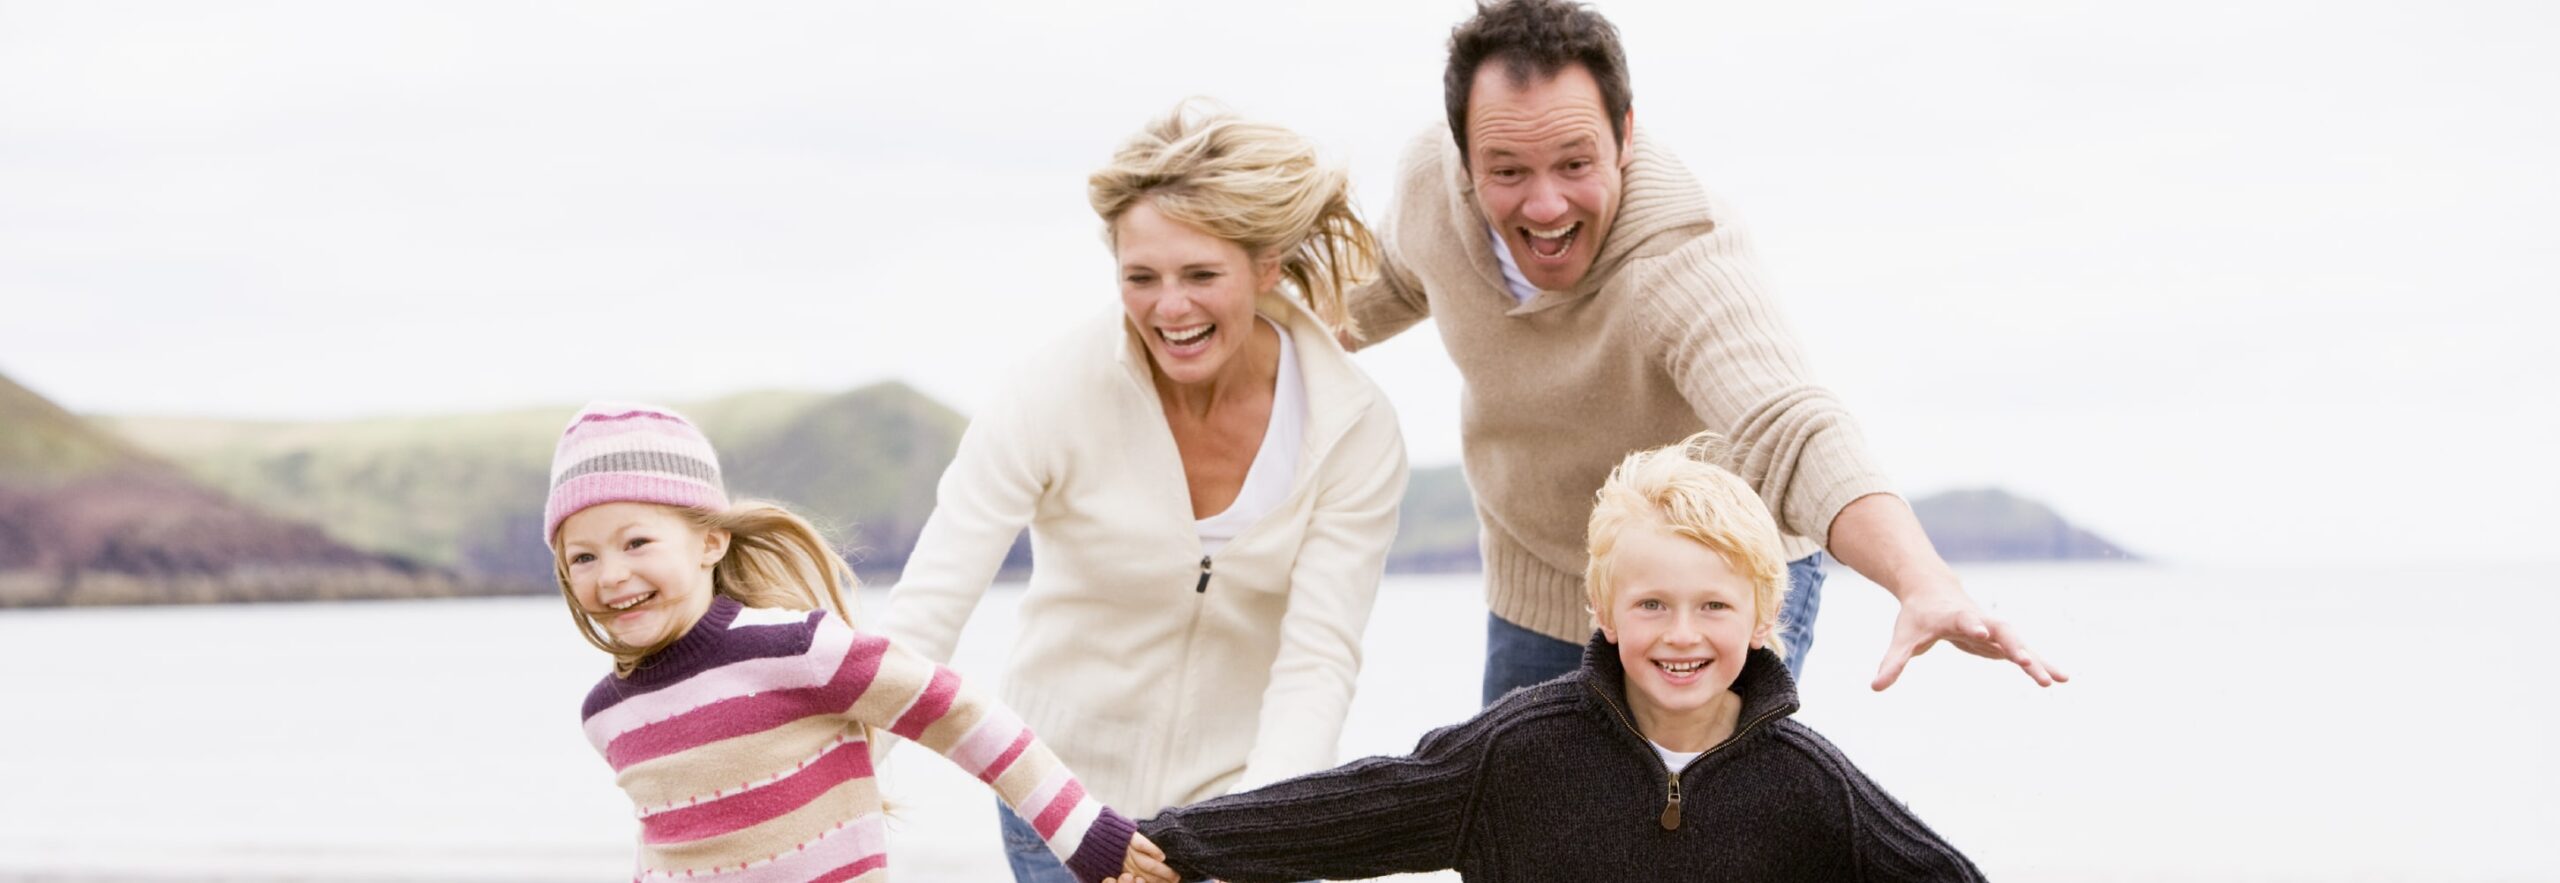 Family running on beach holding hands smiling